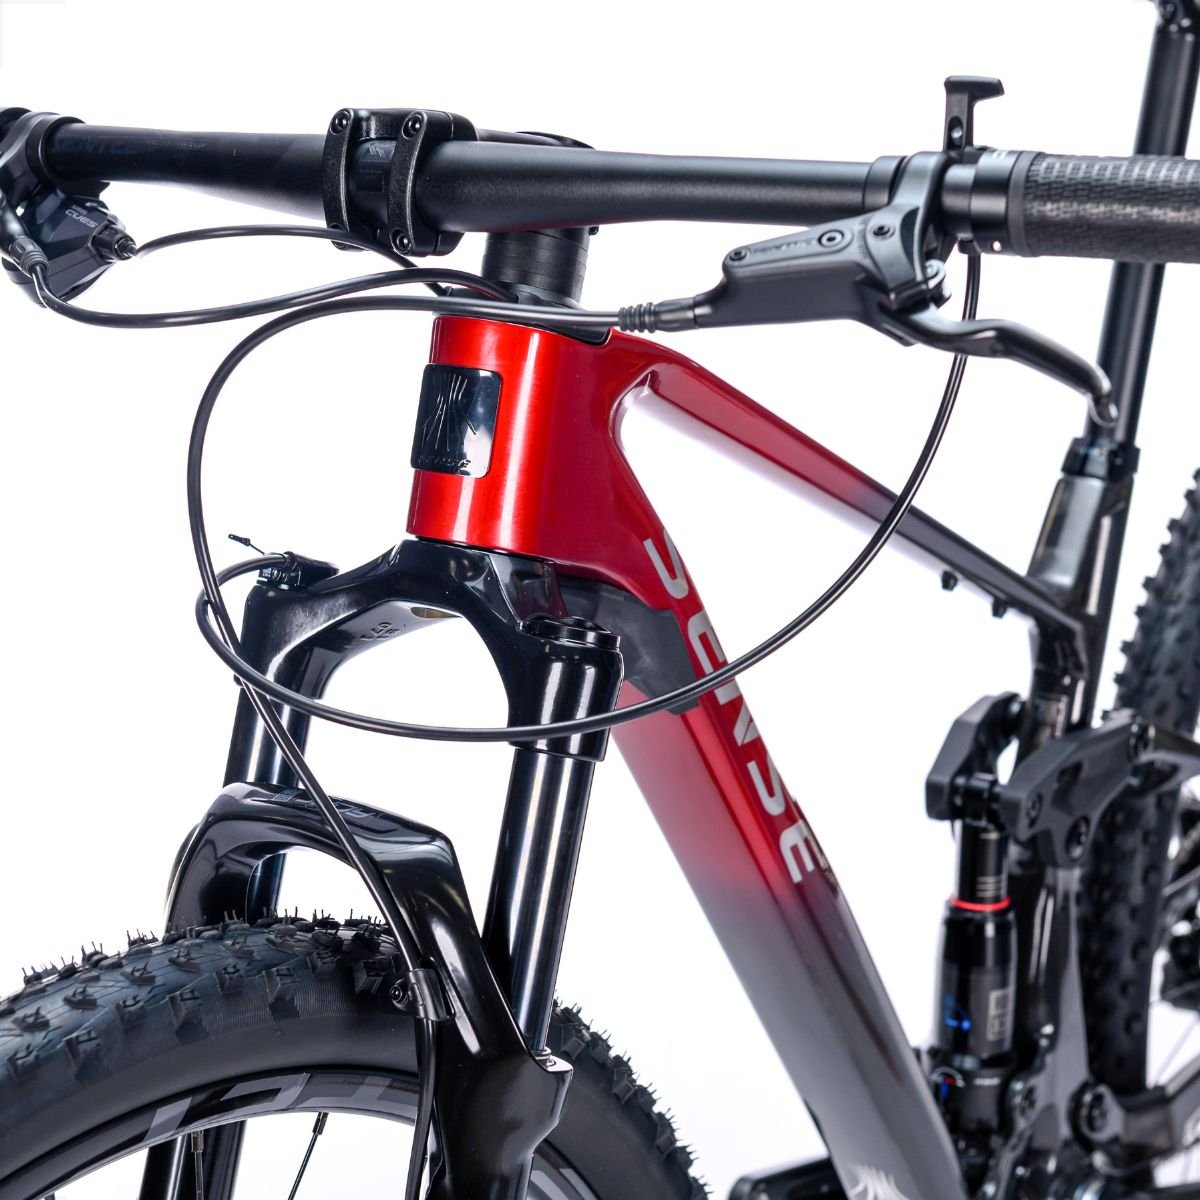 Bicicleta Full Sense Invictus Sport Carbono Shimano Cues:vermelho+preto/15 - 9